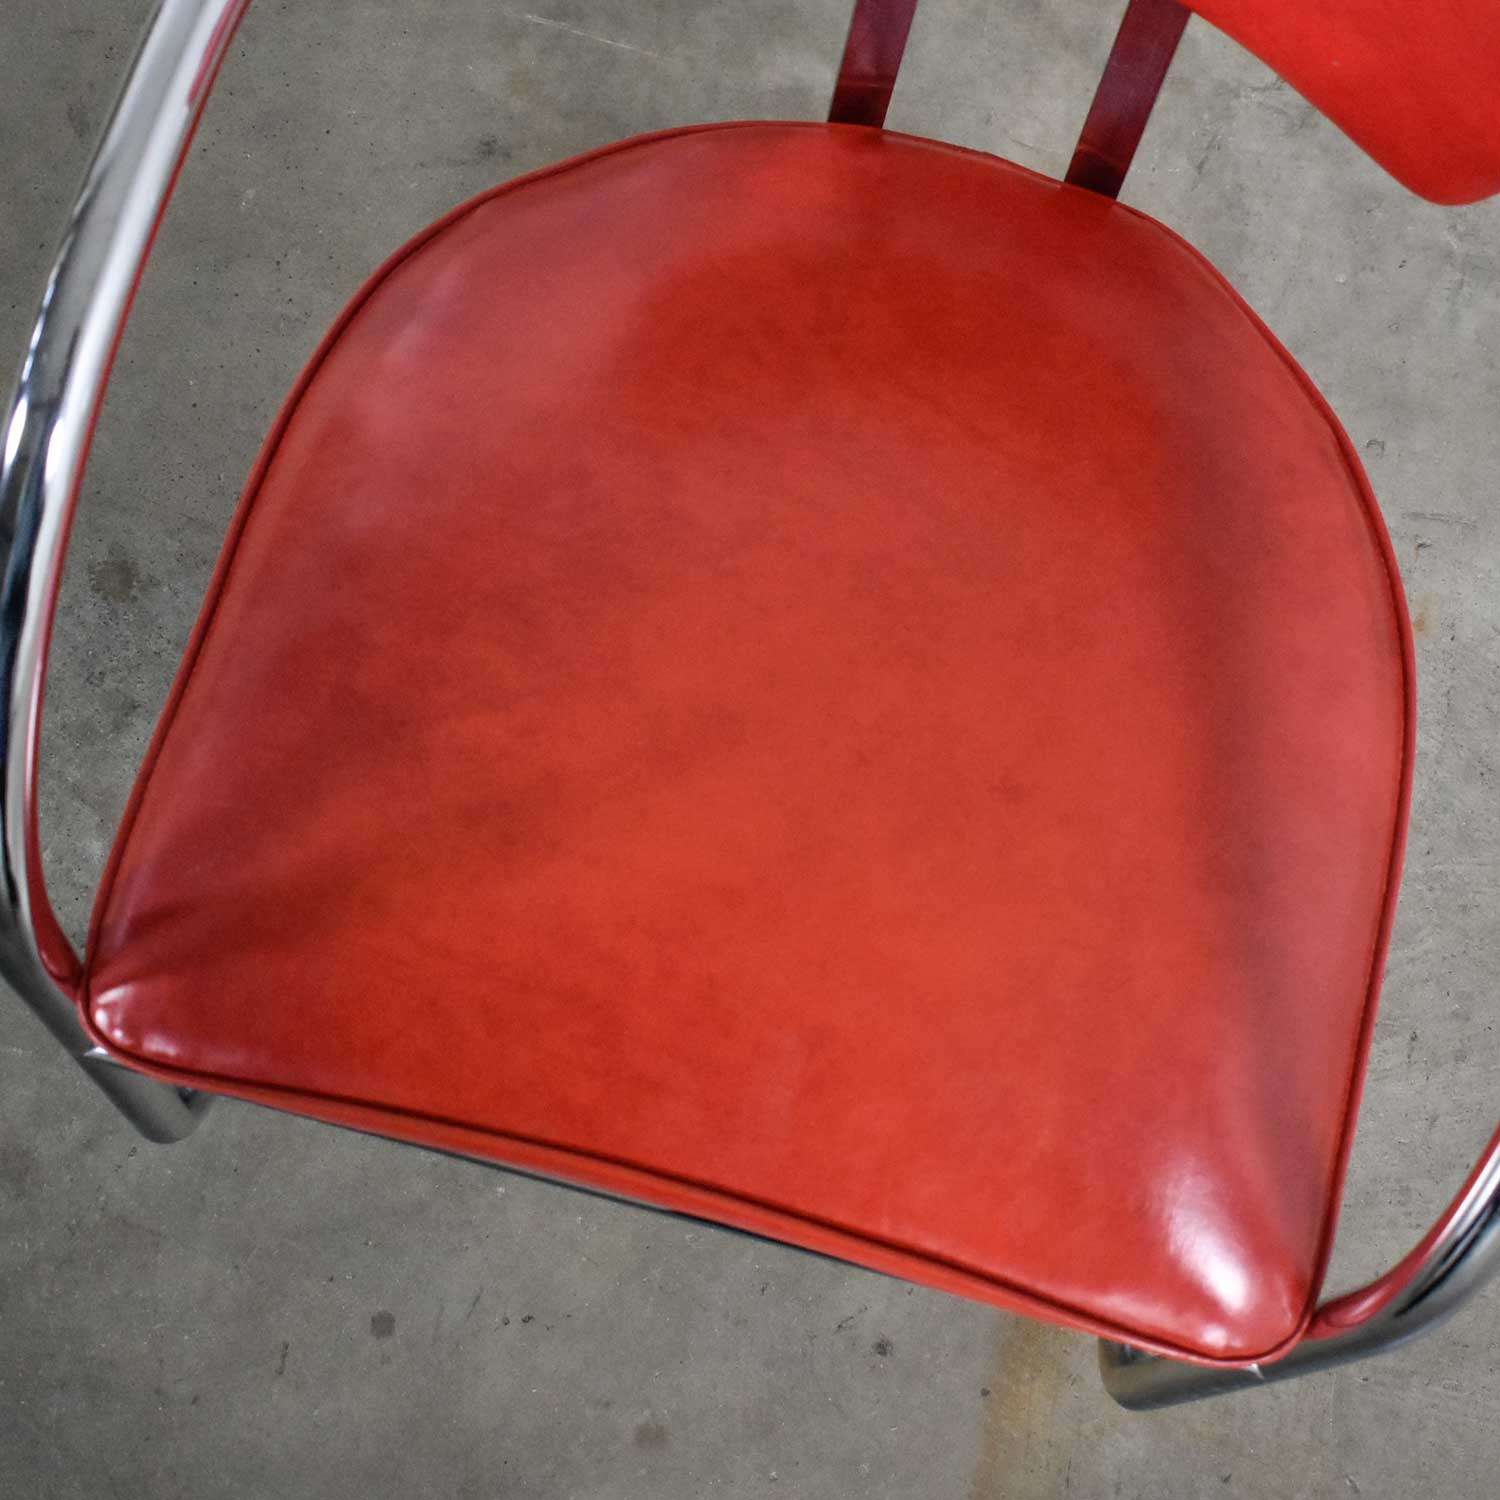 Art Deco Streamline Modern Bauhaus Cantilever Chair Chrome & Red Vinyl Attributed to Kem Weber for Lloyd’s Manufacturing